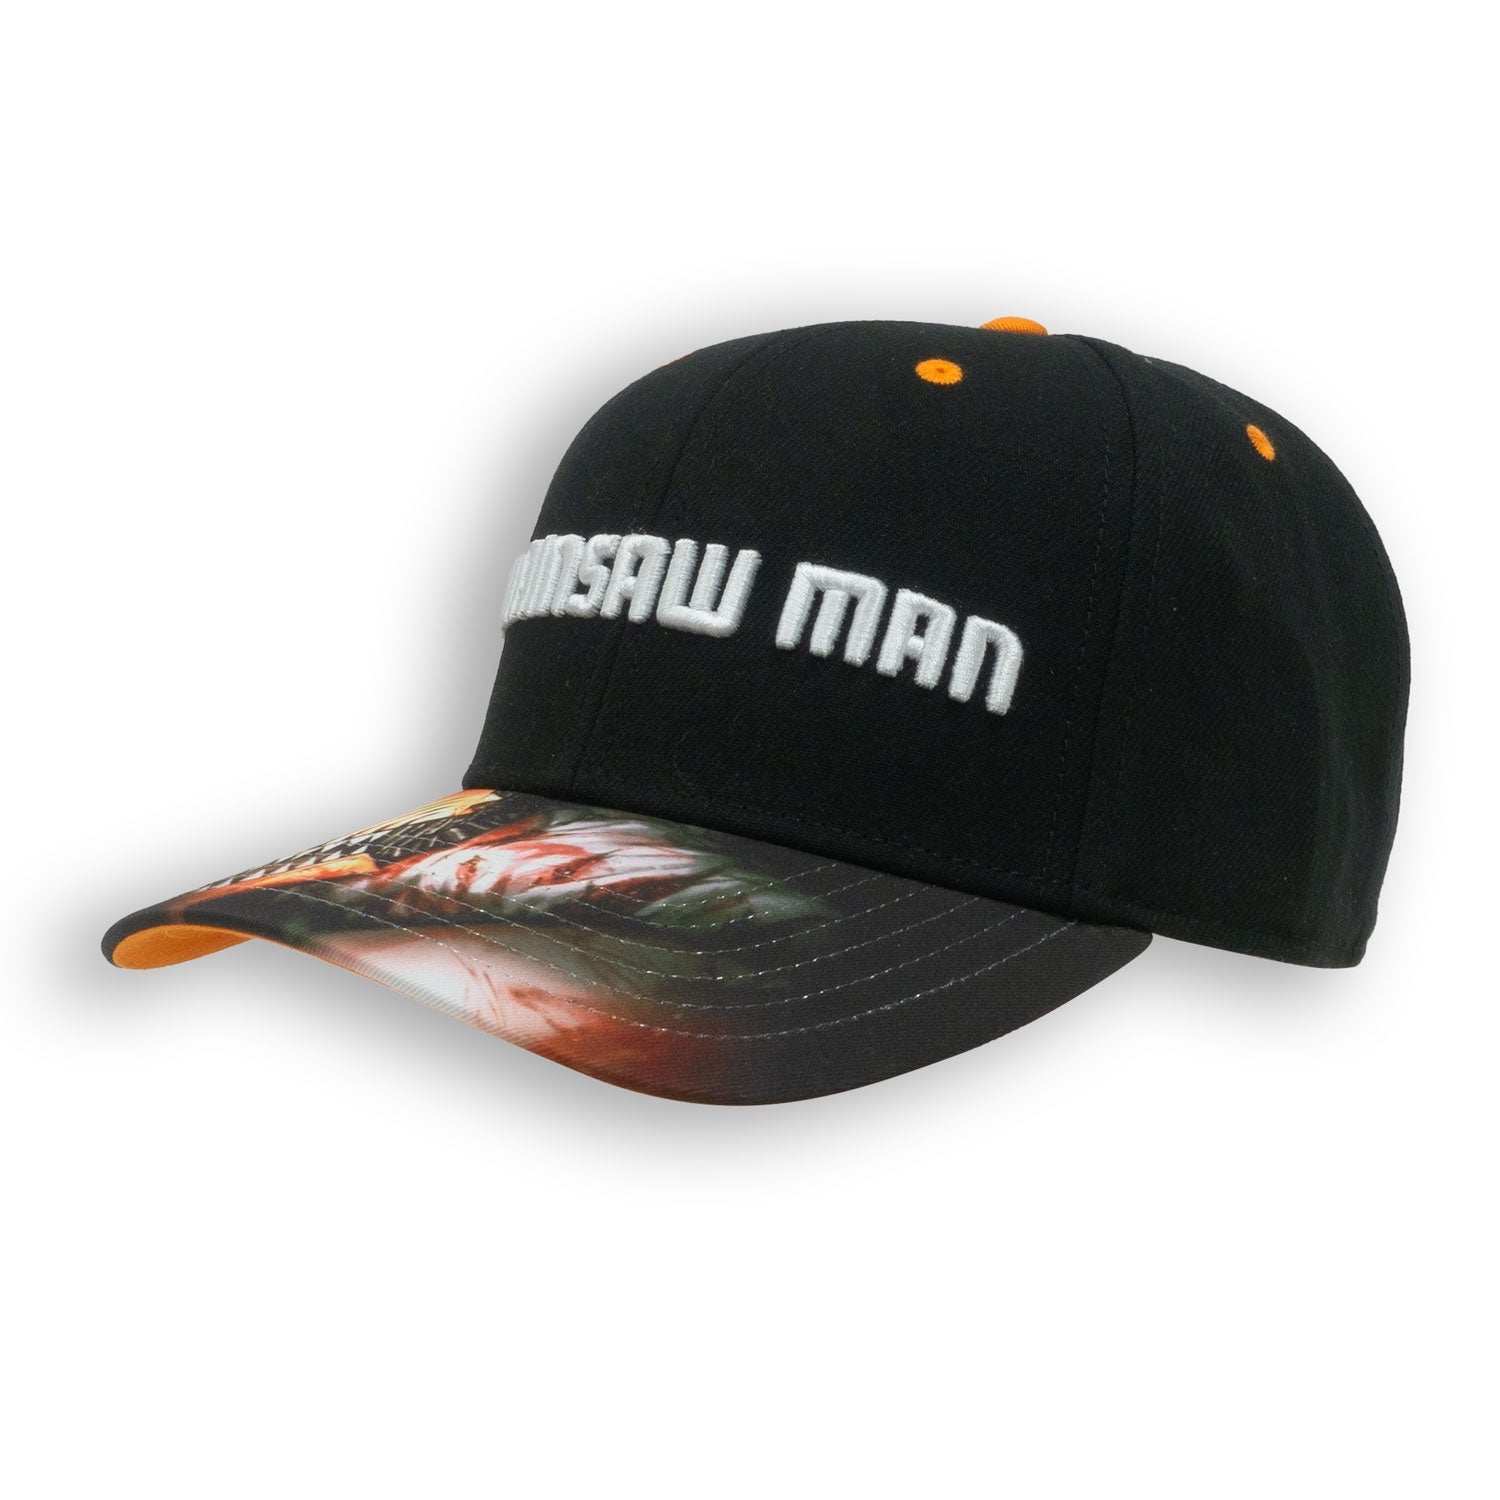 Chainsawman Logo Embroidered Cap with Digital Print Peak - Black